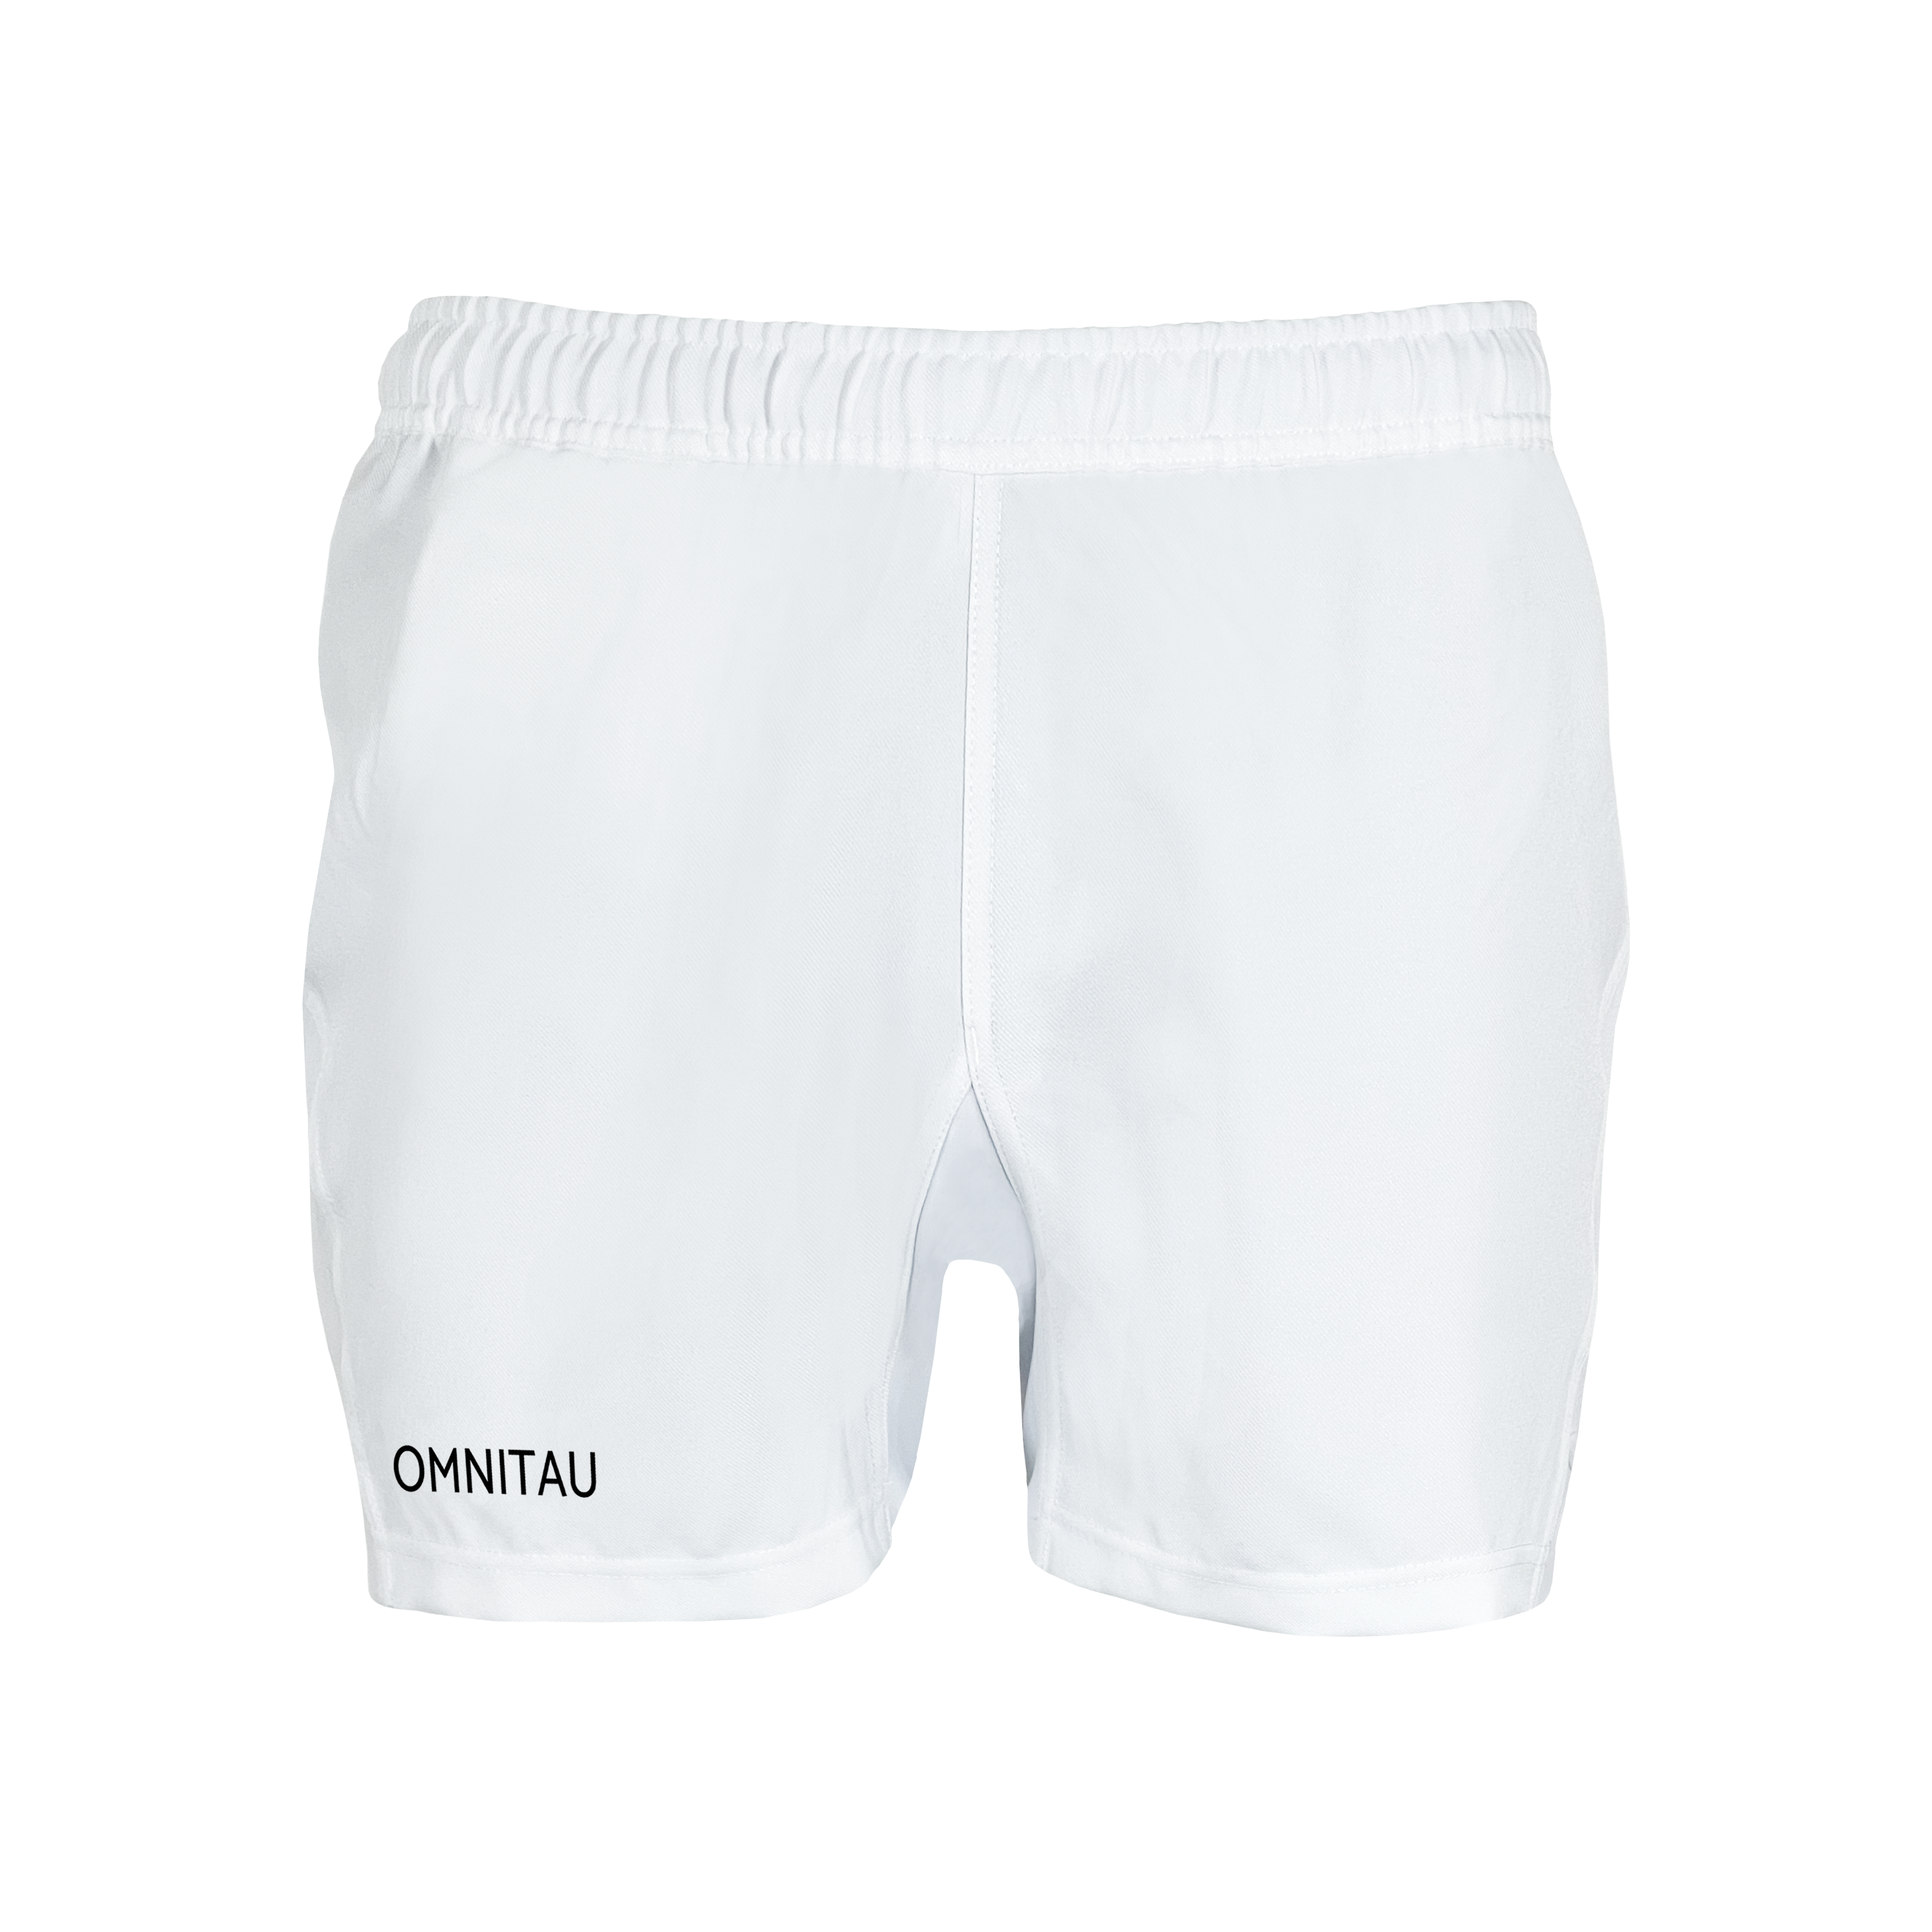 Omnitau Kid's Team Sports Breathable Rugby Shorts - White